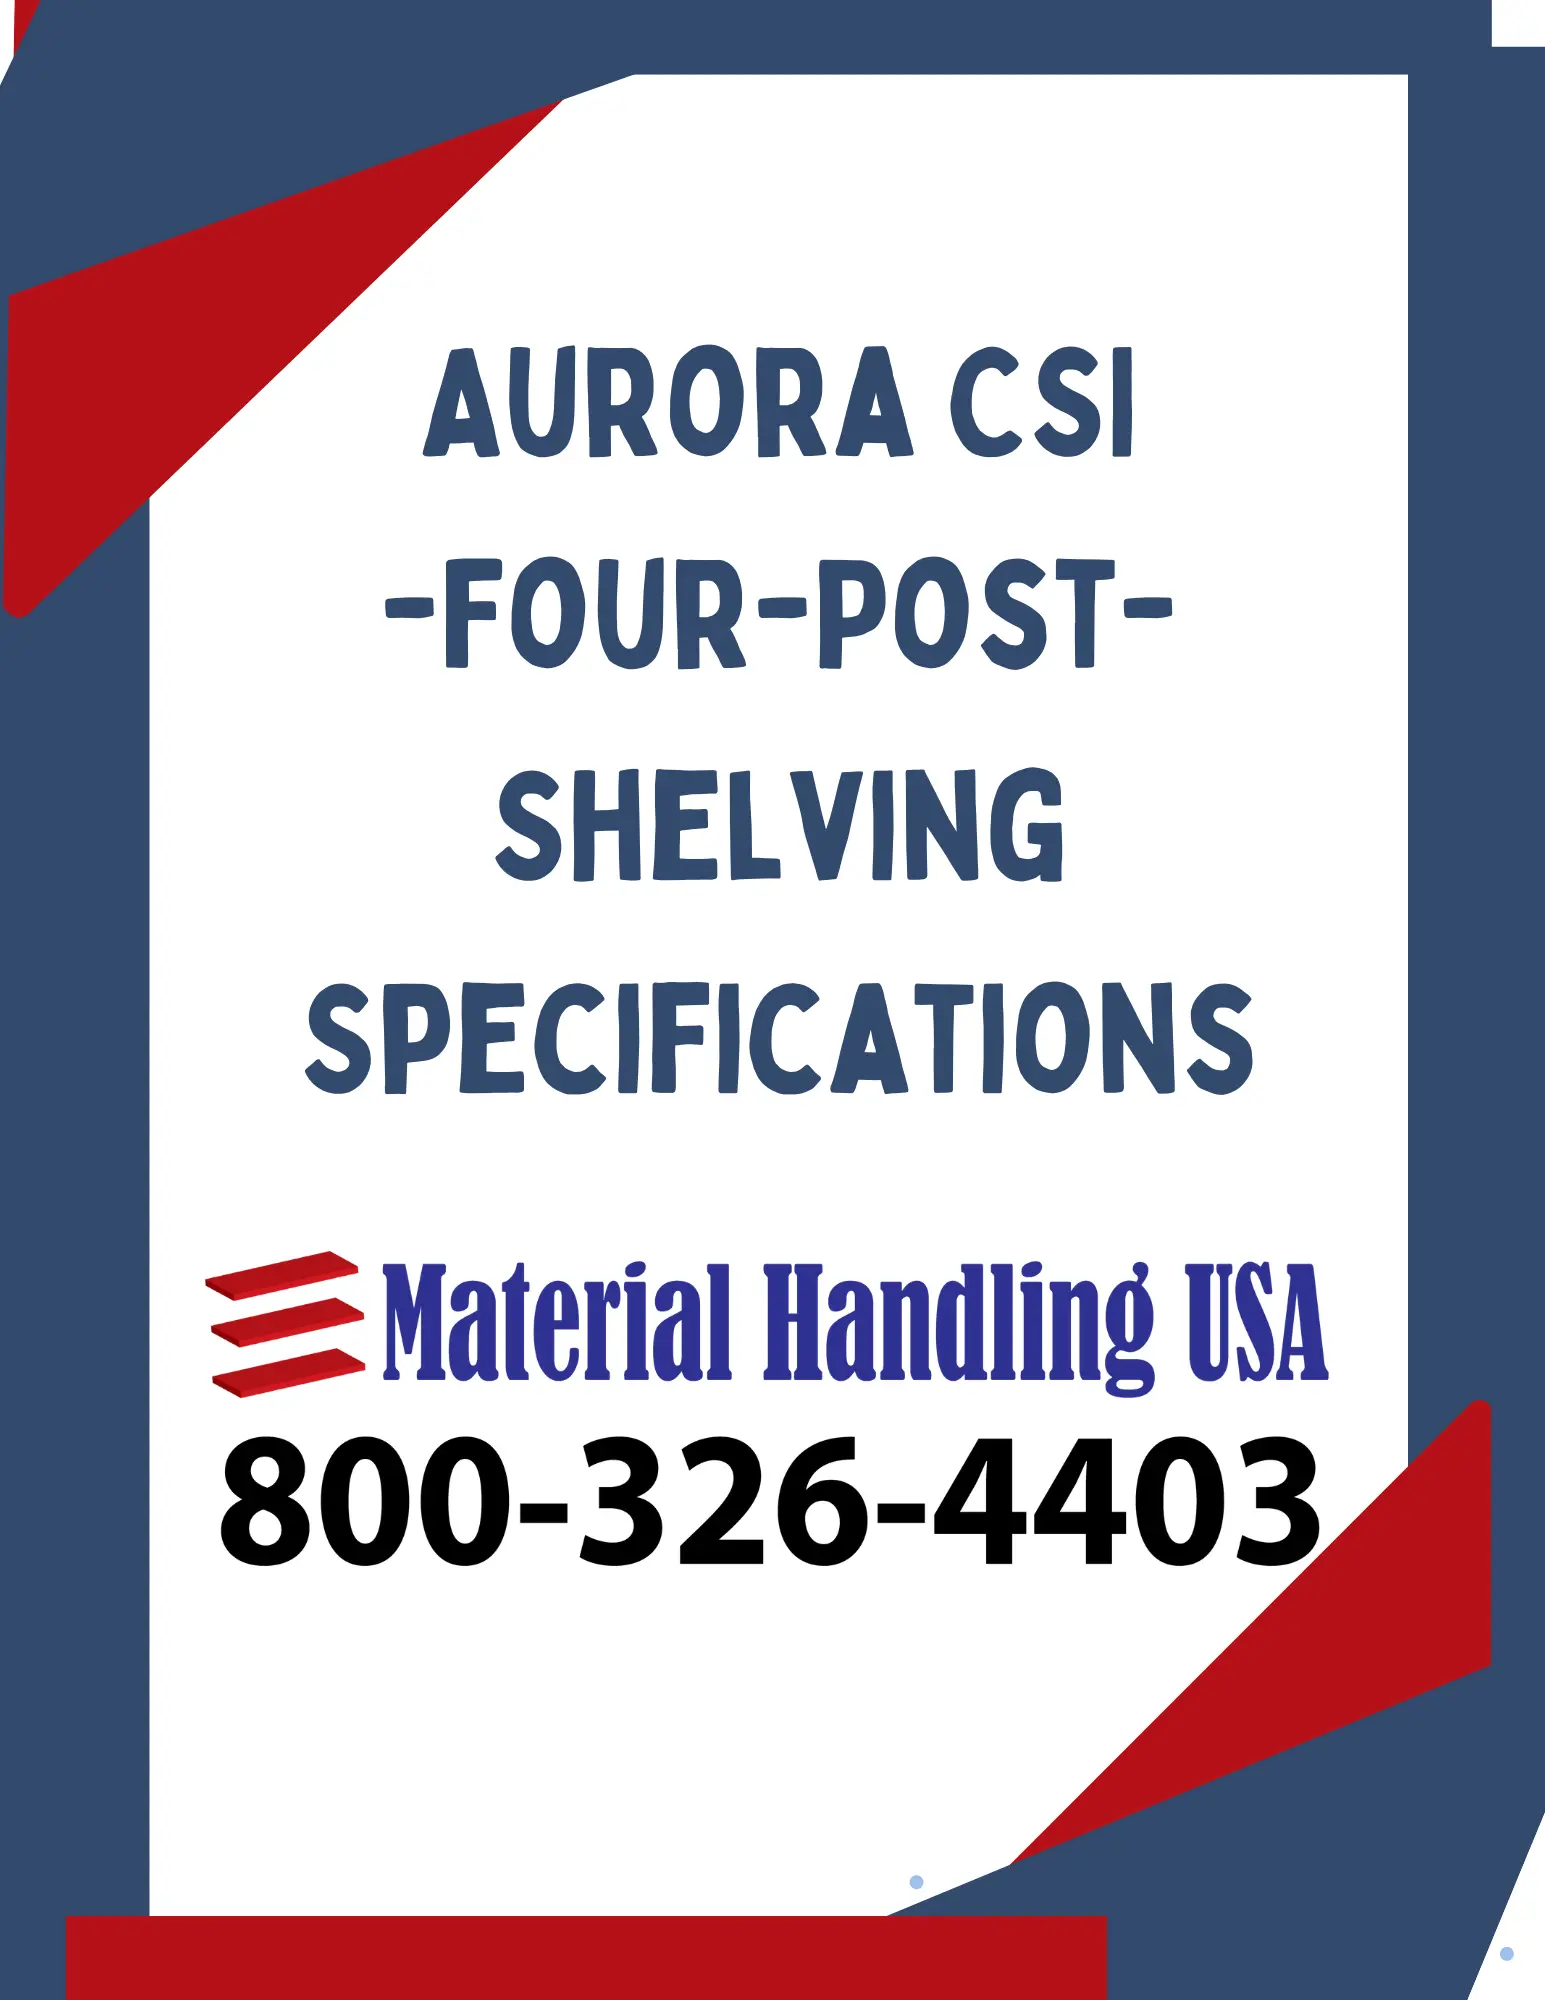 Aurora CSI -Four-Post-Shelving Specifications